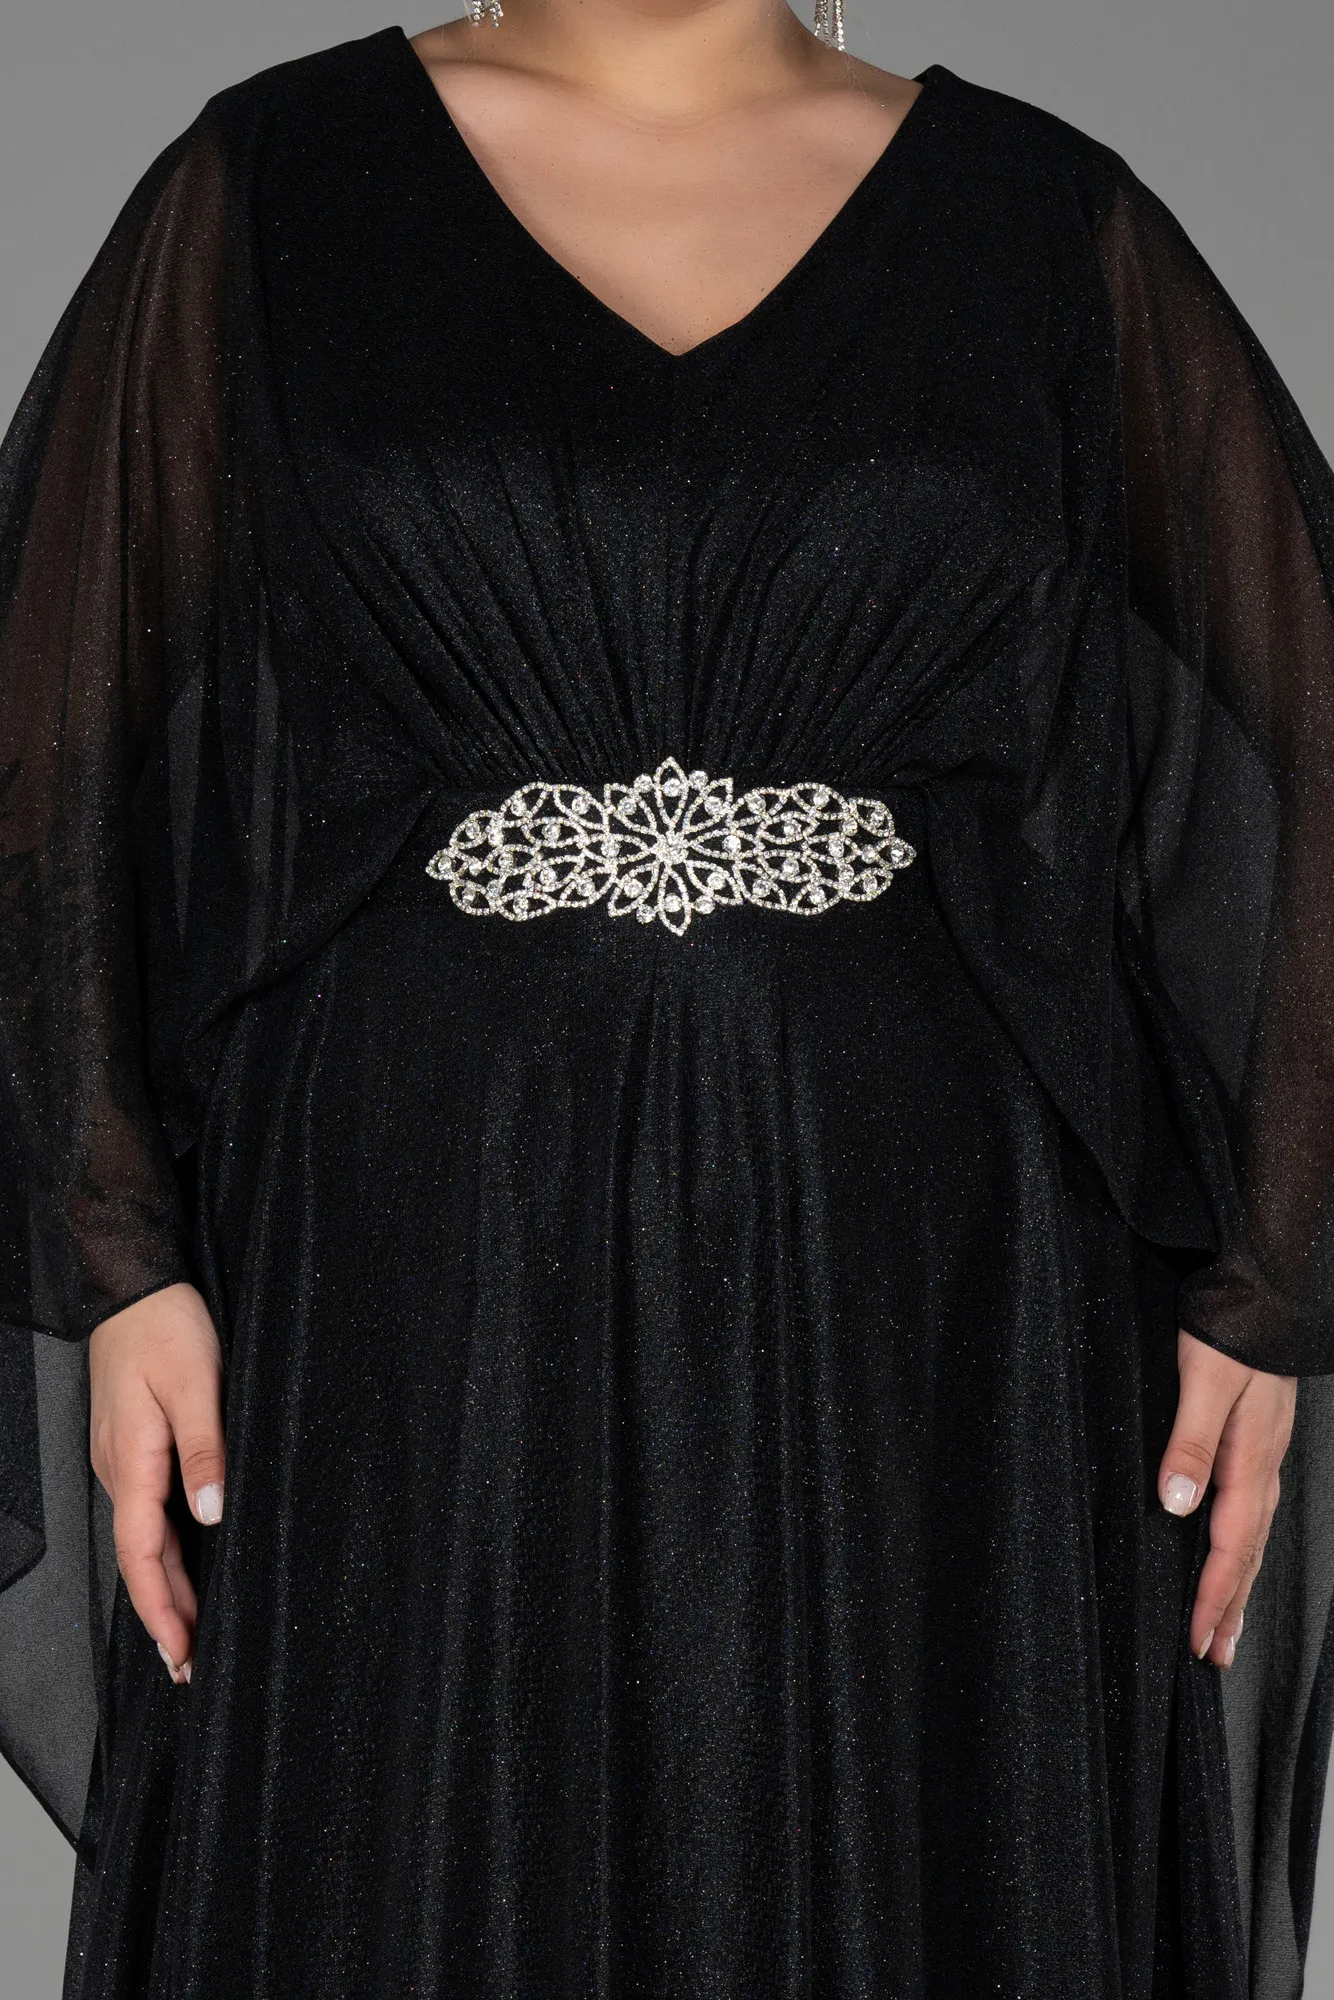 Black-Long Plus Size Evening Dress ABU3278